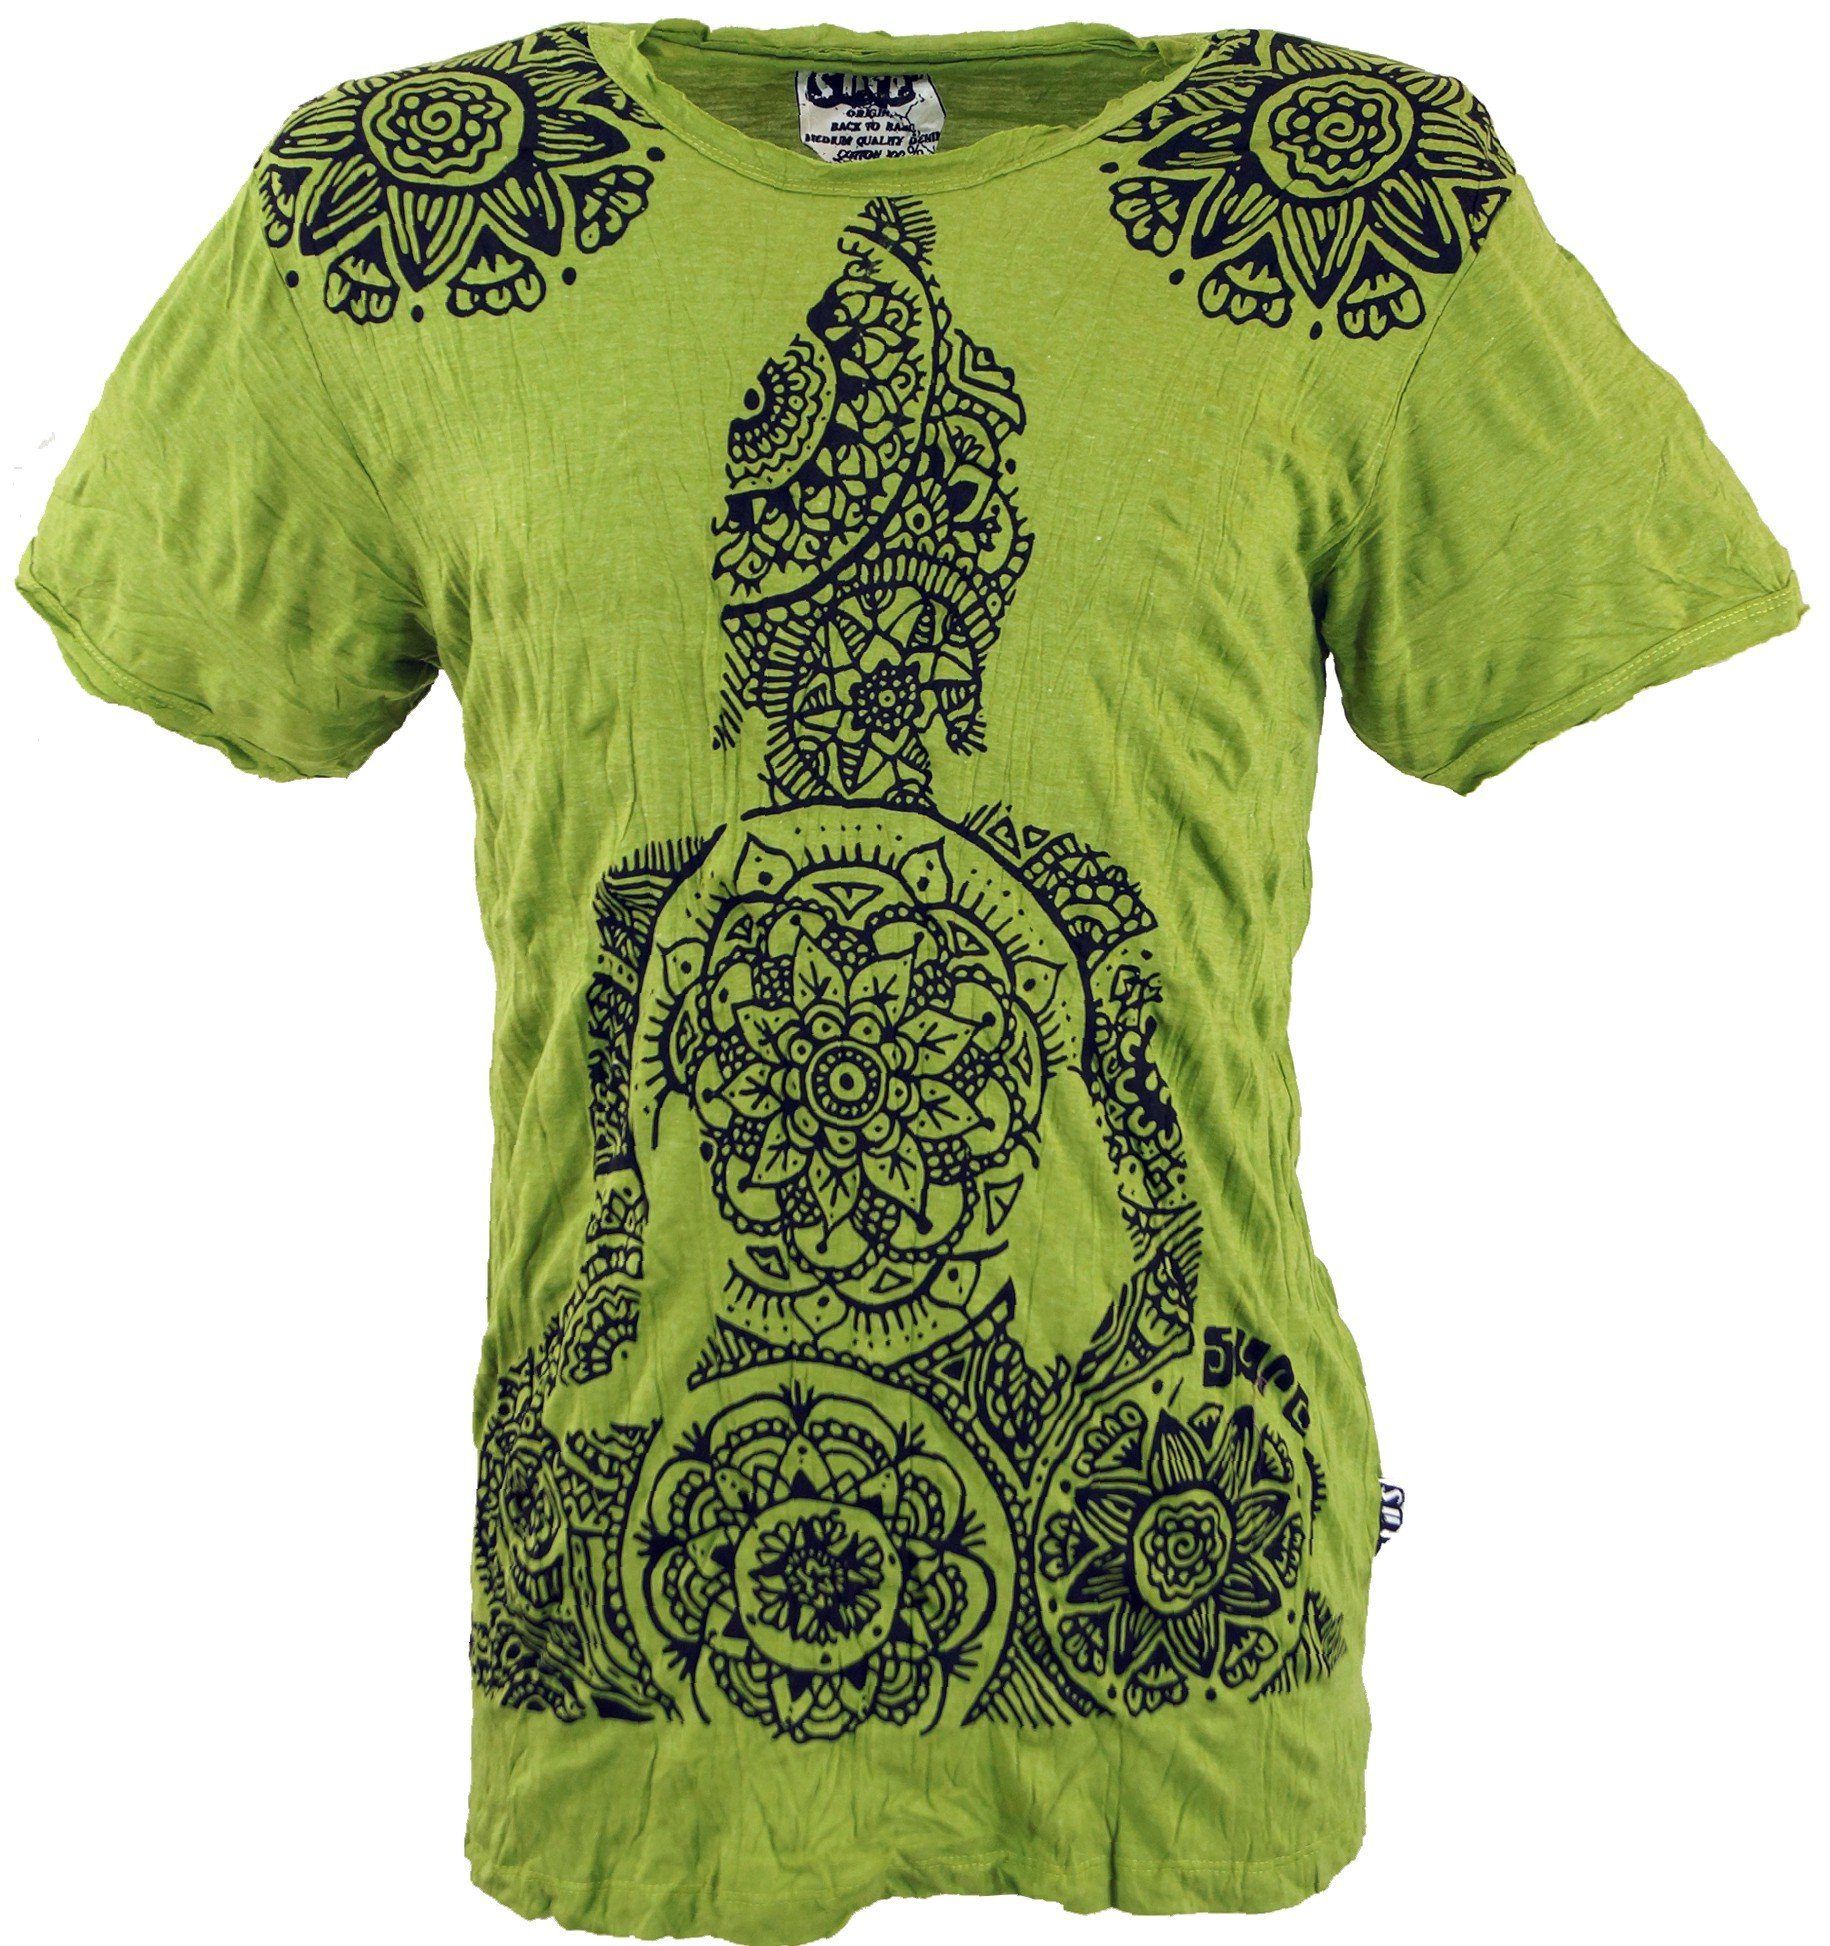 Guru-Shop T-Shirt Goa alternative T-Shirt Mandala Buddha Festival, lemon Bekleidung Style, Sure 